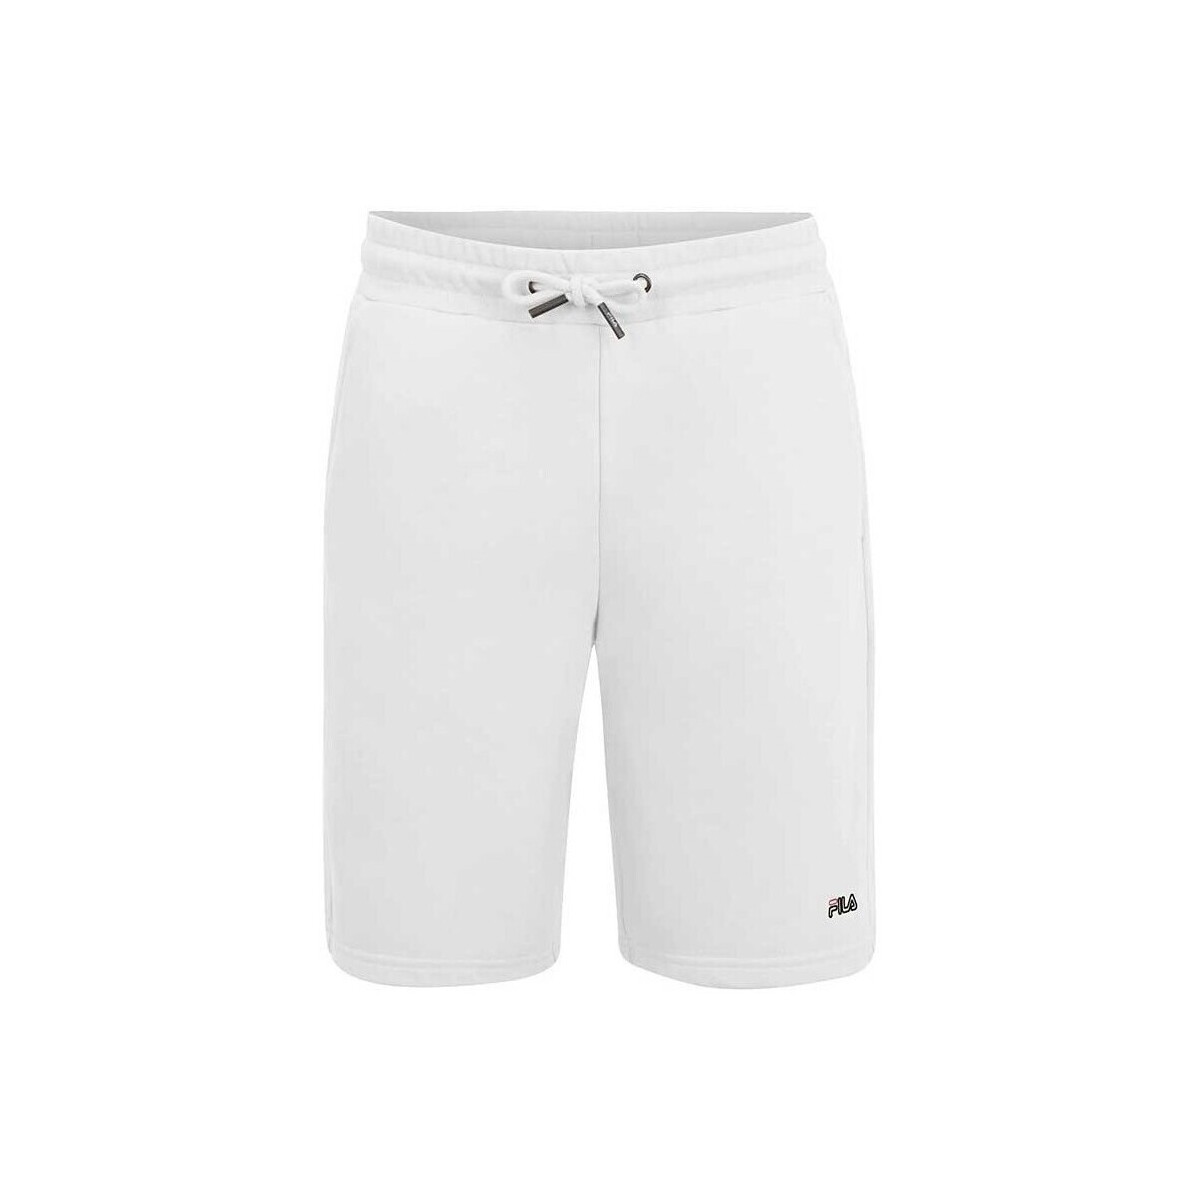 textil Hombre Pantalones cortos Fila SPARKS Blanco